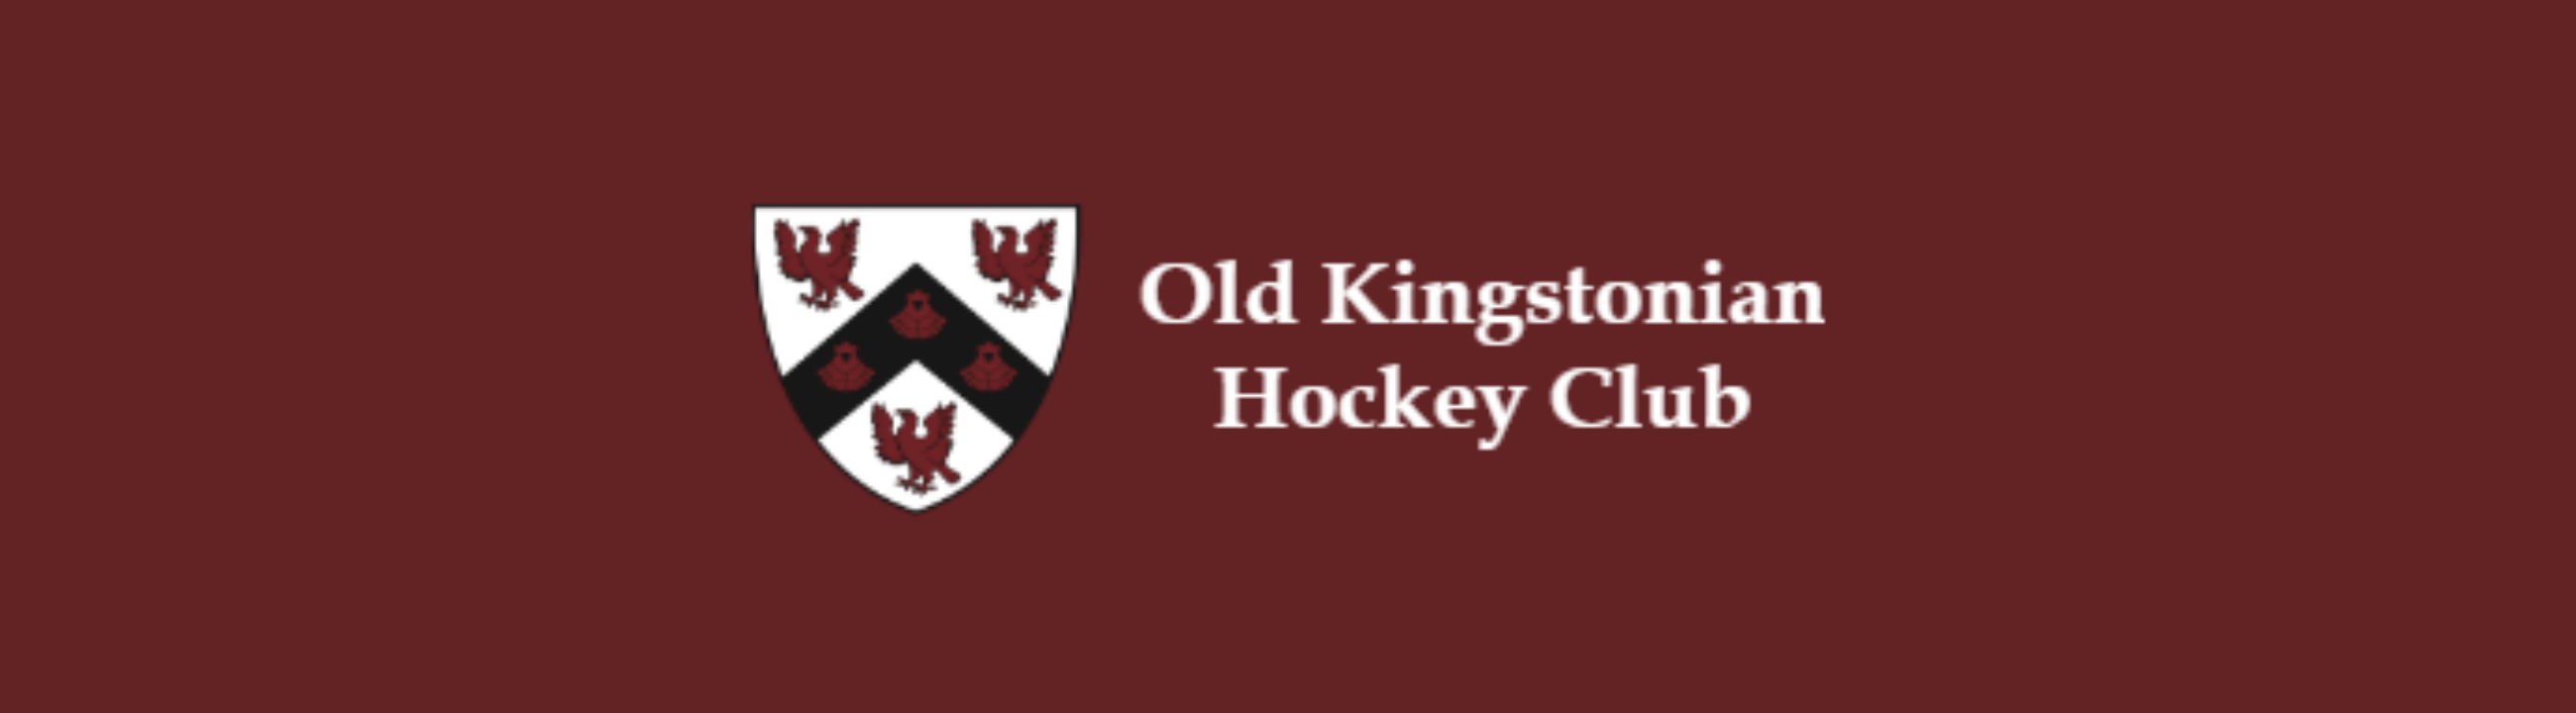 Old Kingstonians Hockey Club